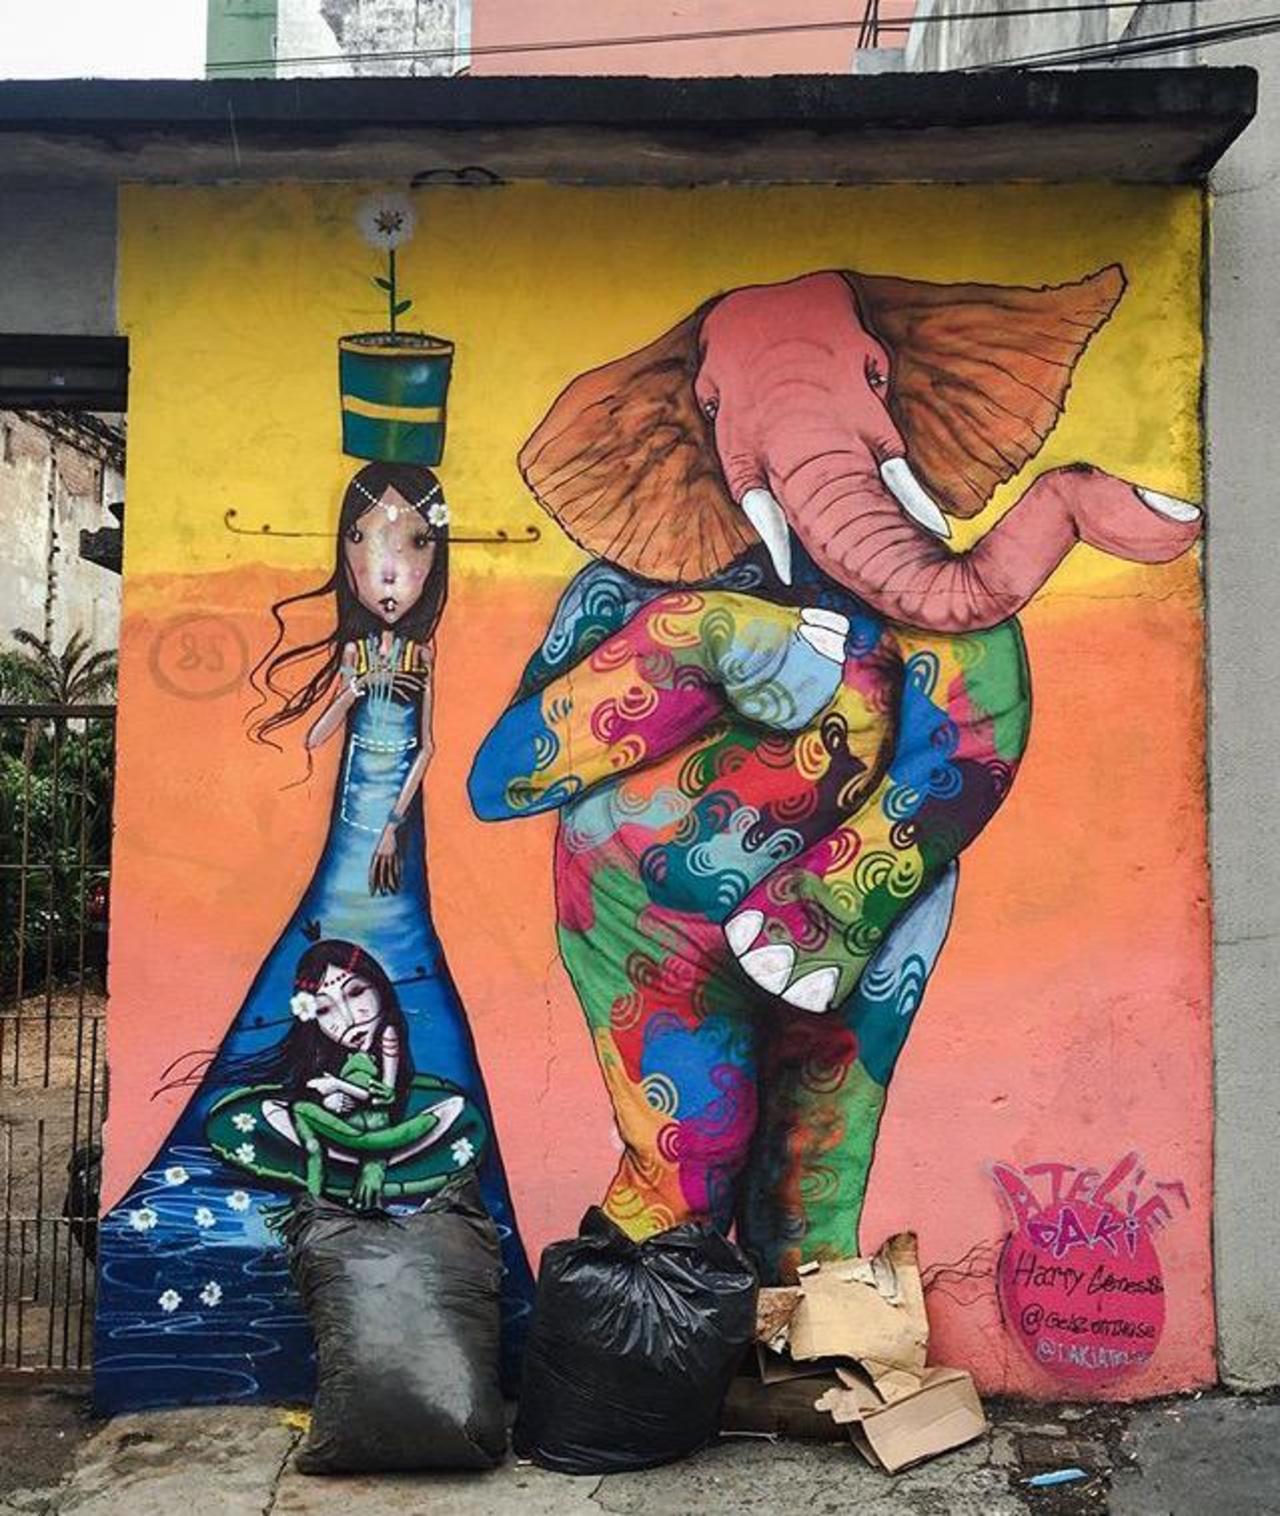 RT belilac "RT belilac "Street Art by Harry Geneis & Gelson in São Paulo 

#art #mural #graffiti #streetart http://t.co/dIwXQB5D9H""